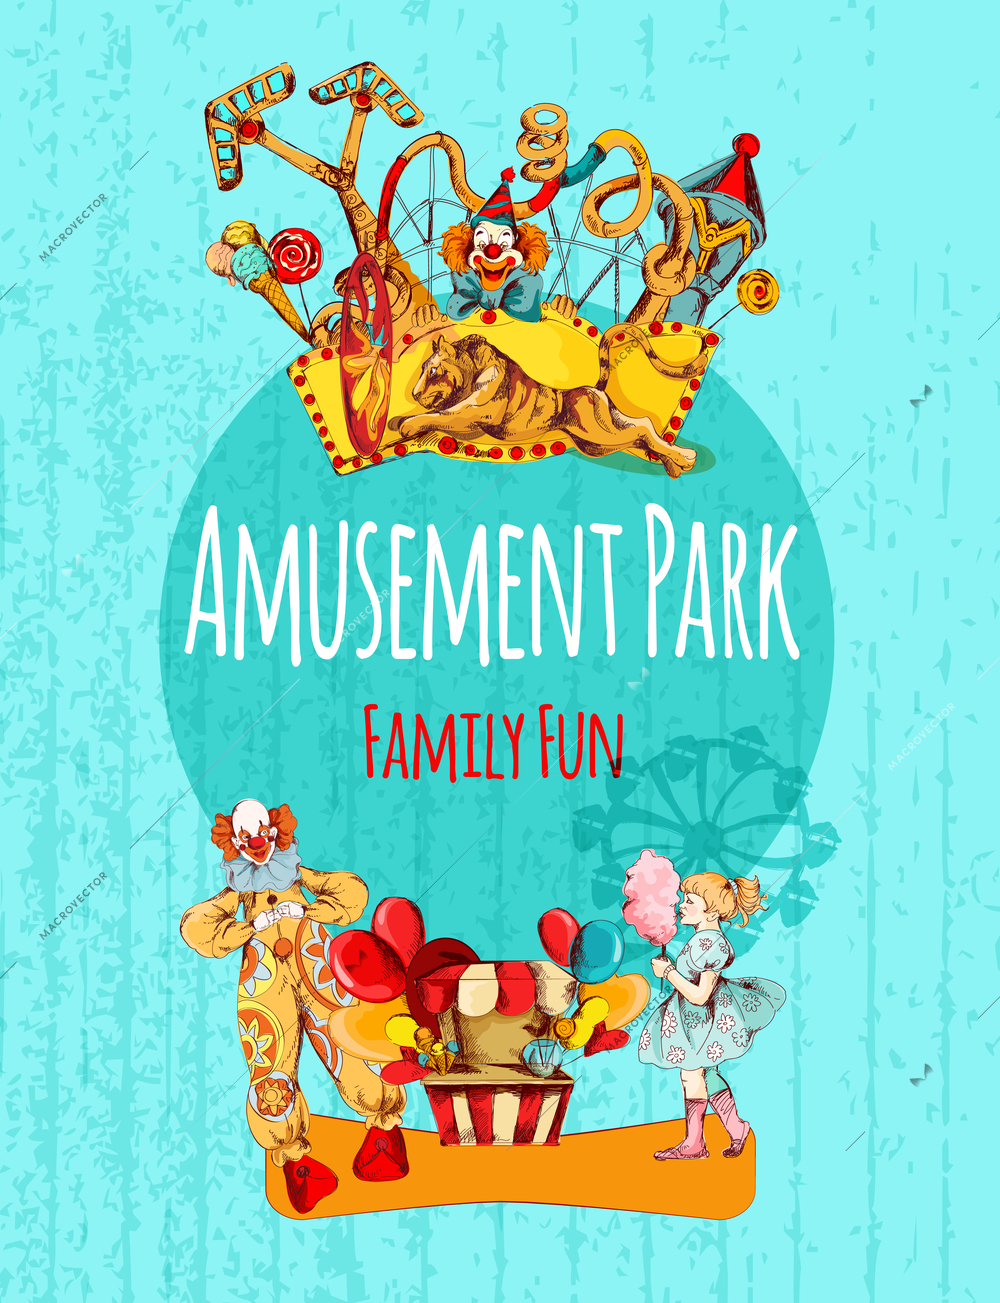 Amusement park circus festival family fun hand drawn poster vector illustration